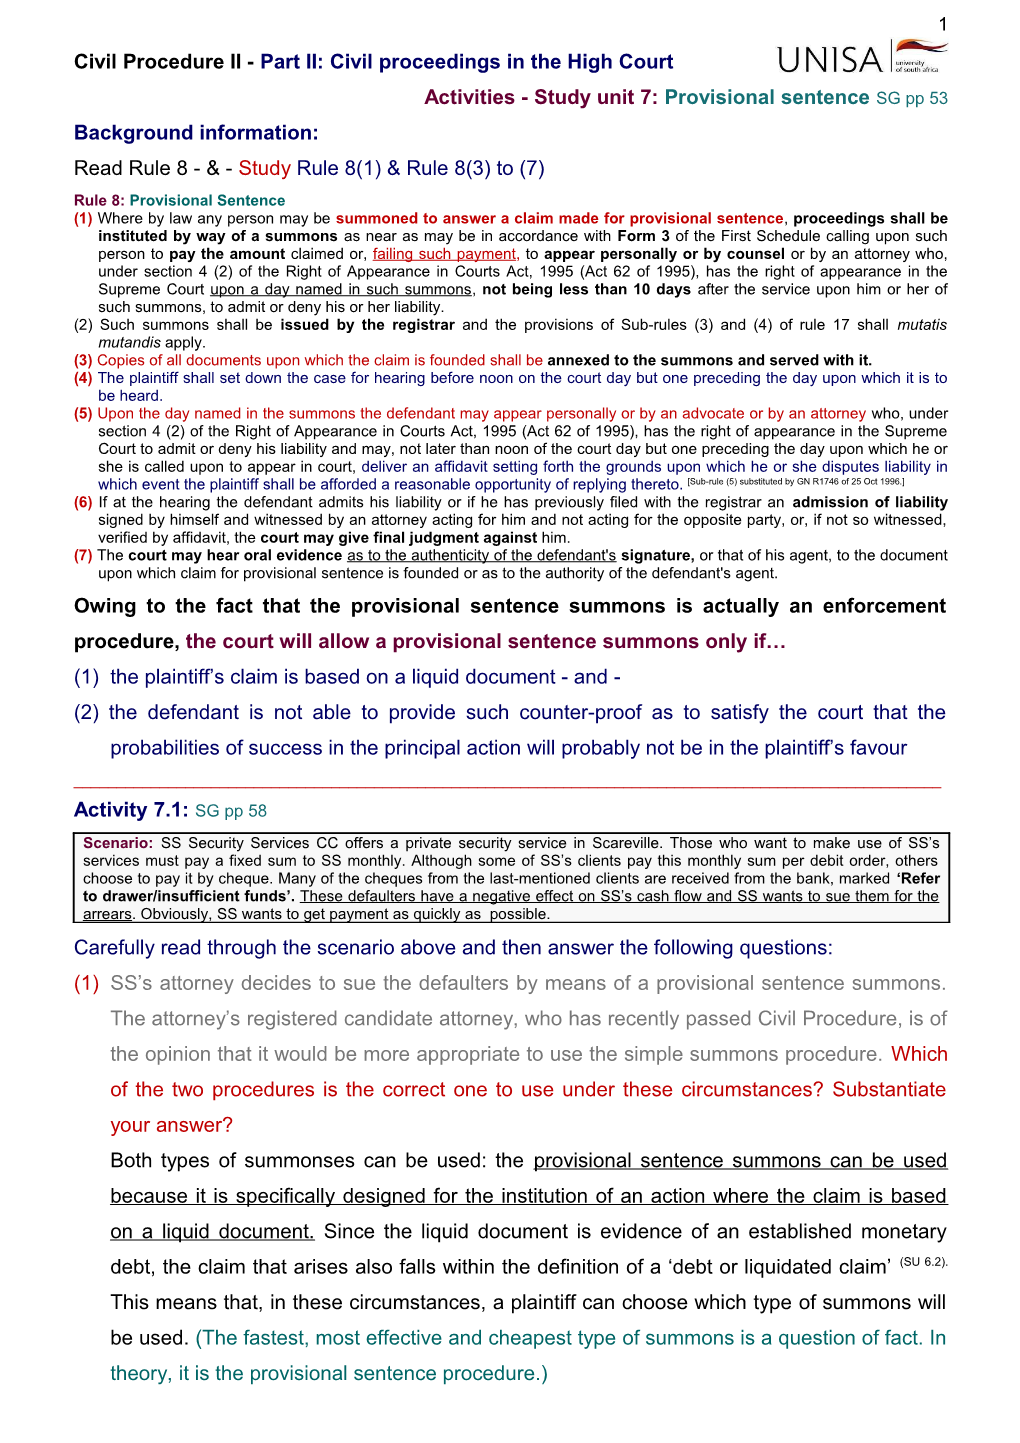 Activities - Study Unit 7:Provisional Sentence SG Pp 53